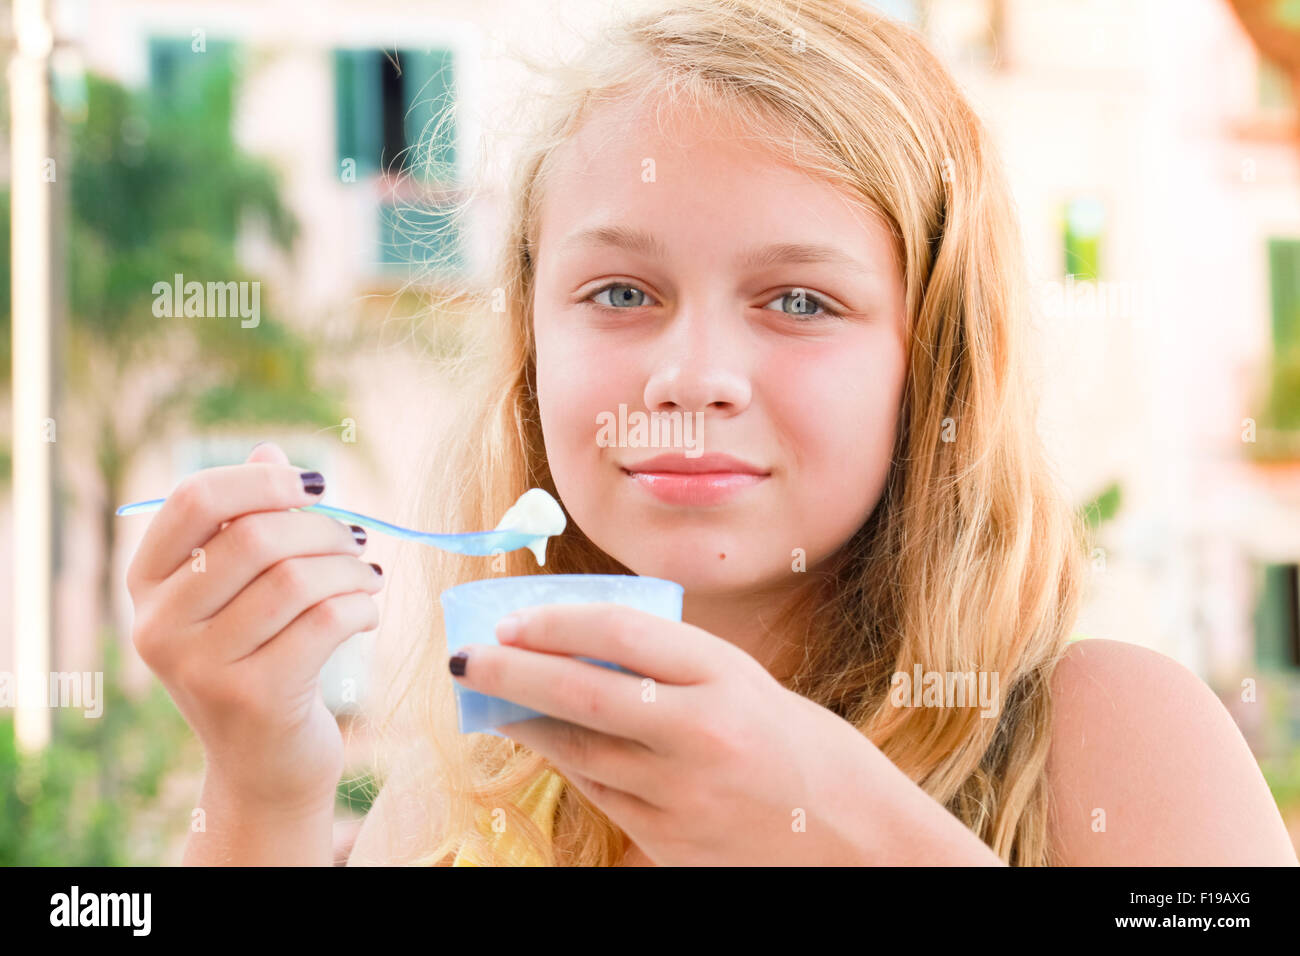 Blond Caucasian teenage girl eats frozen yogurt, close up outdoor portrait with natural light Stock Photo